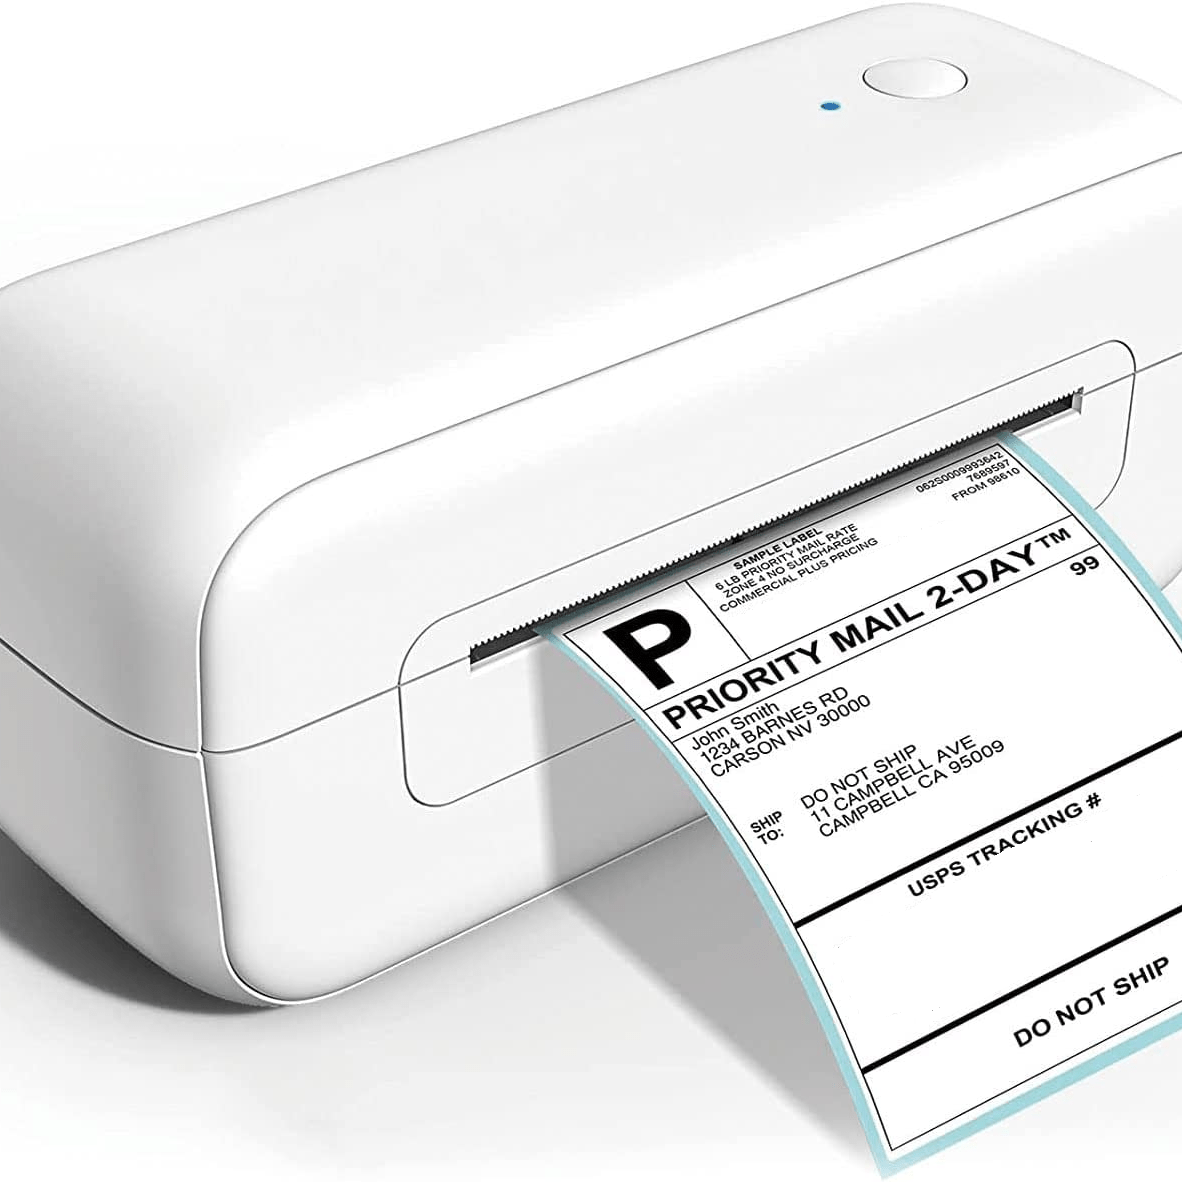  Itari Thermal Label Printer-Shipping Label Printer, 4